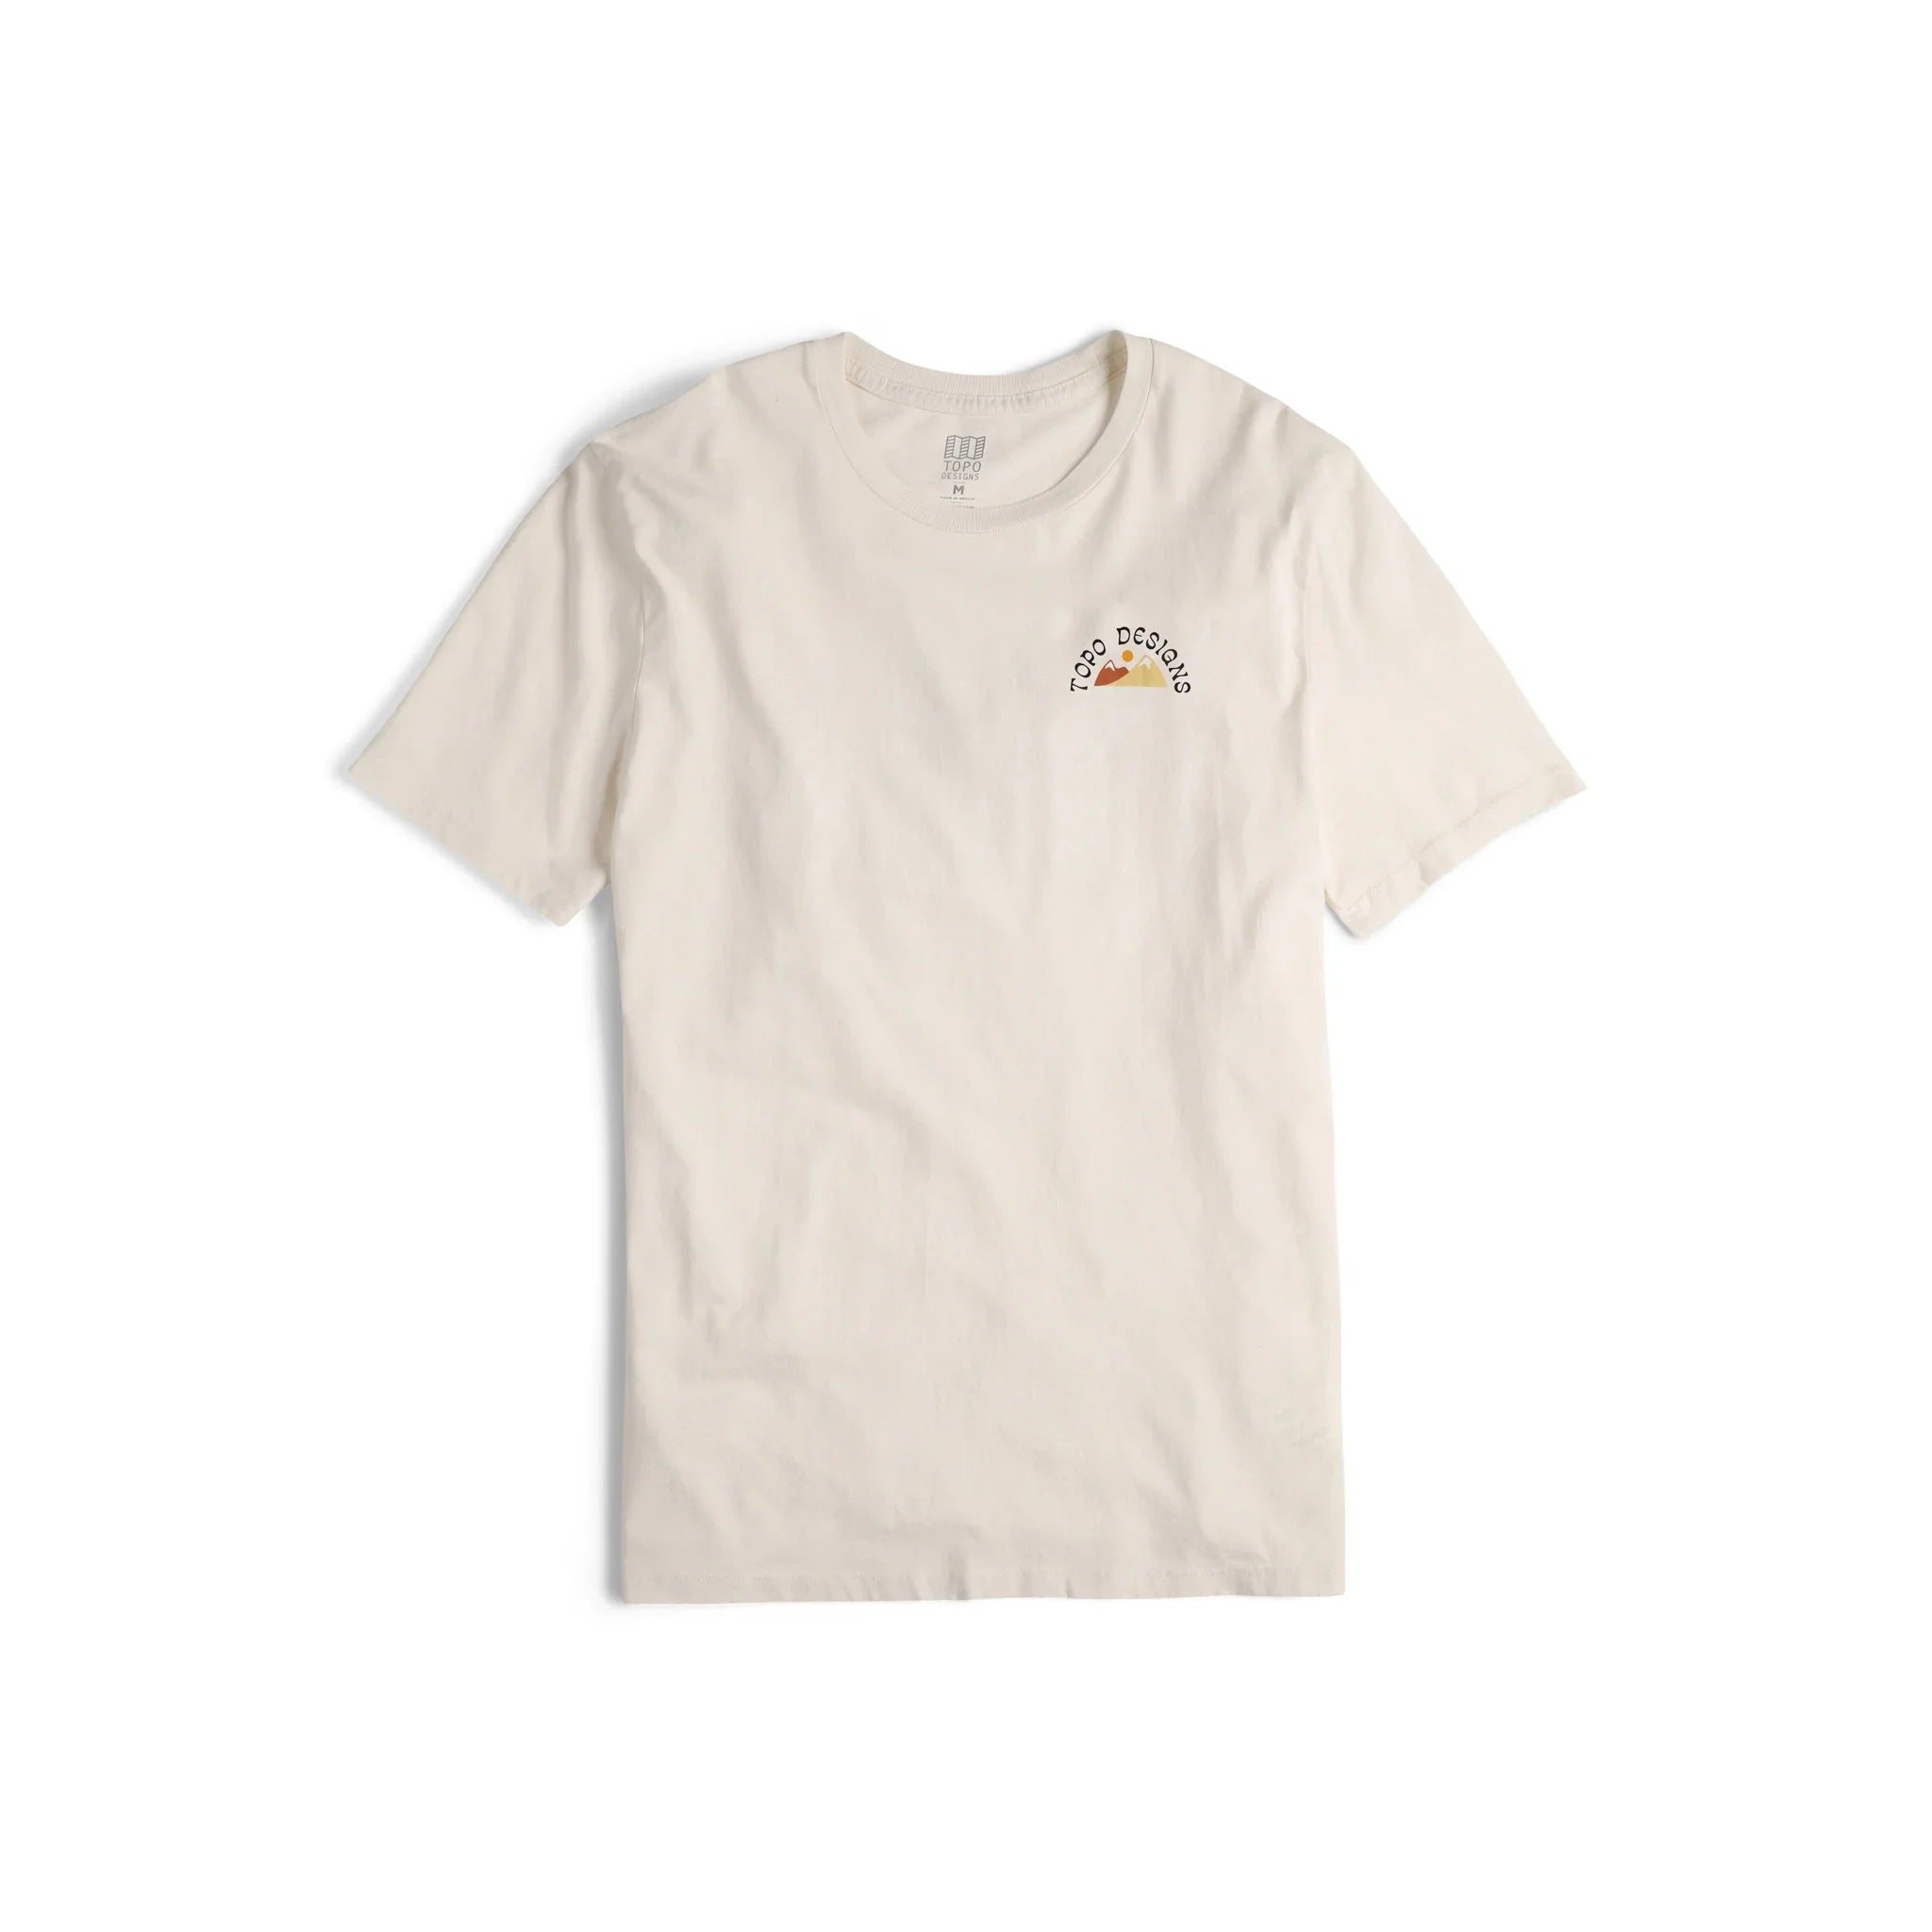 Tee shirt alpenglow Topo Designs - Natural